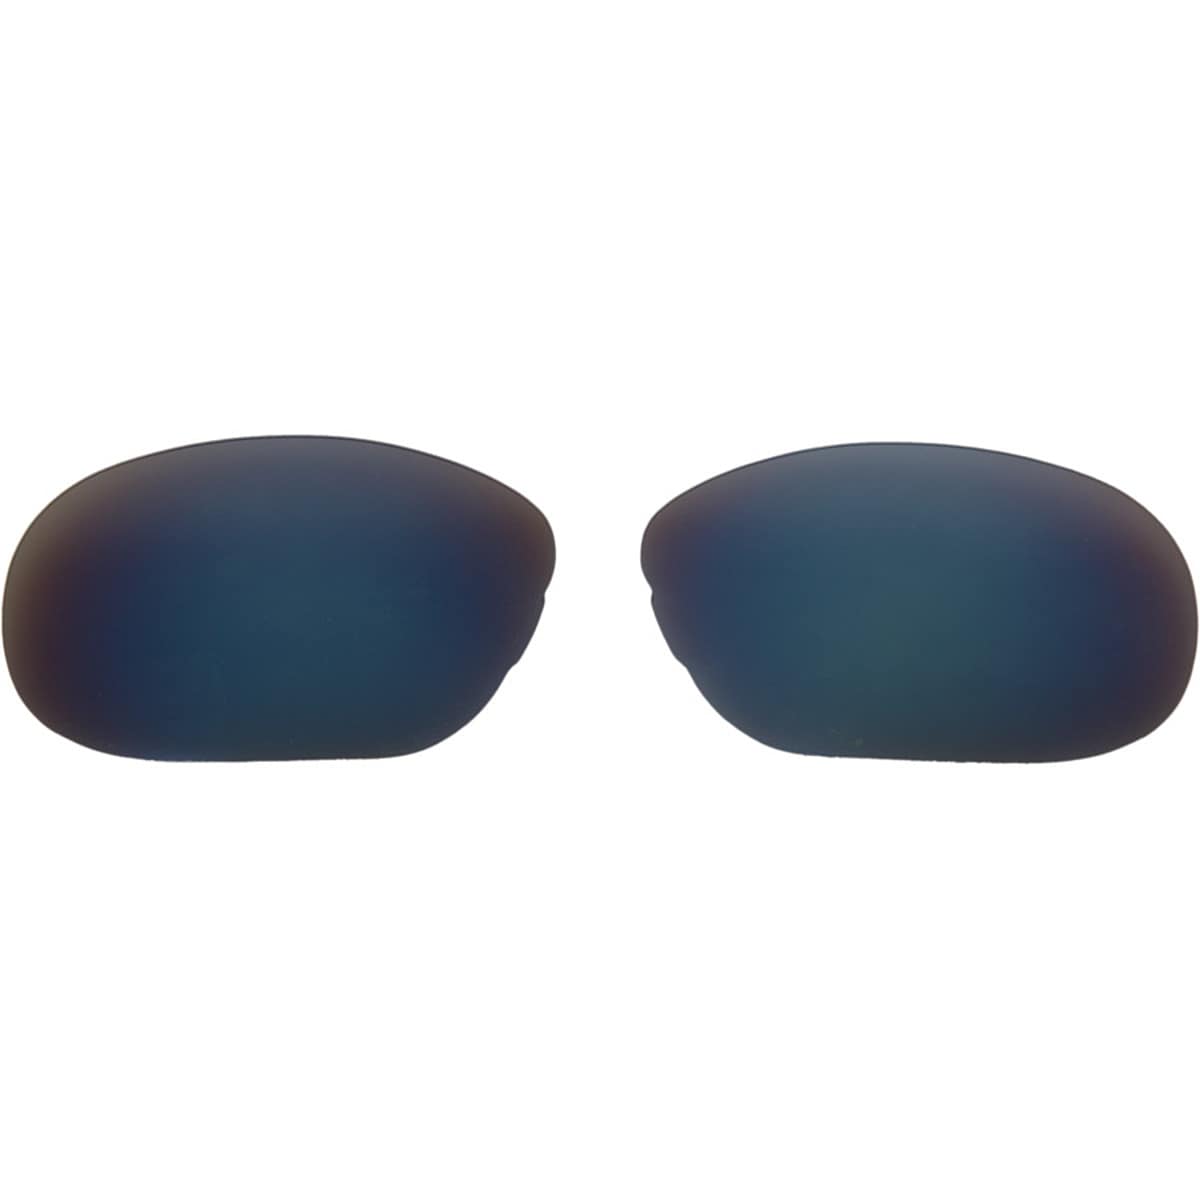 Native Eyewear Apres Sunglass Replacement Lens | eBay